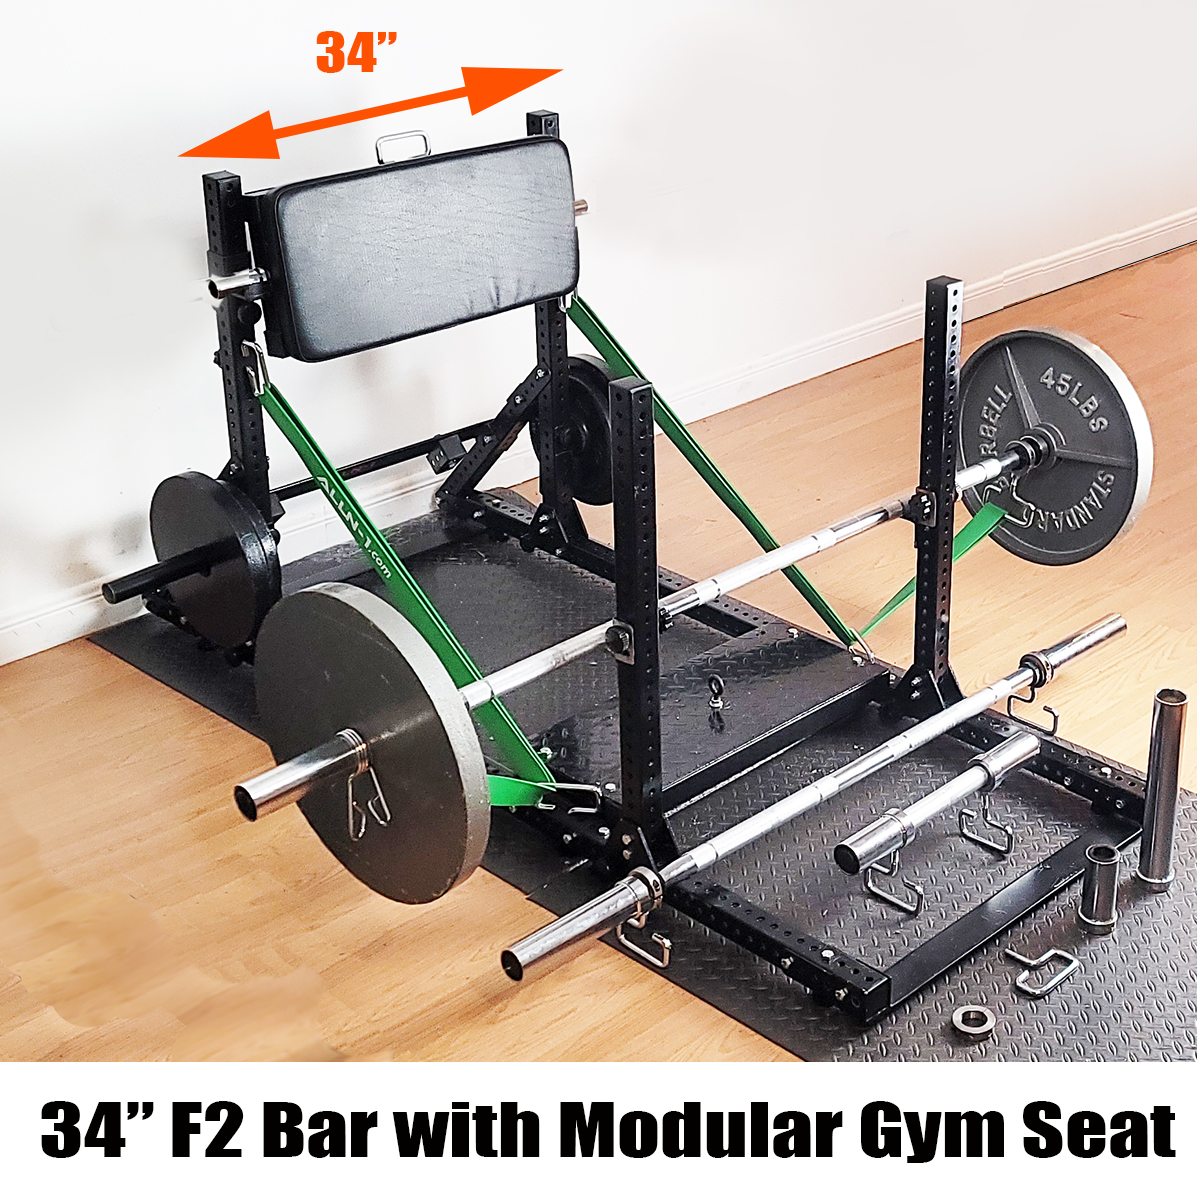 F2 Modular Gym Seat